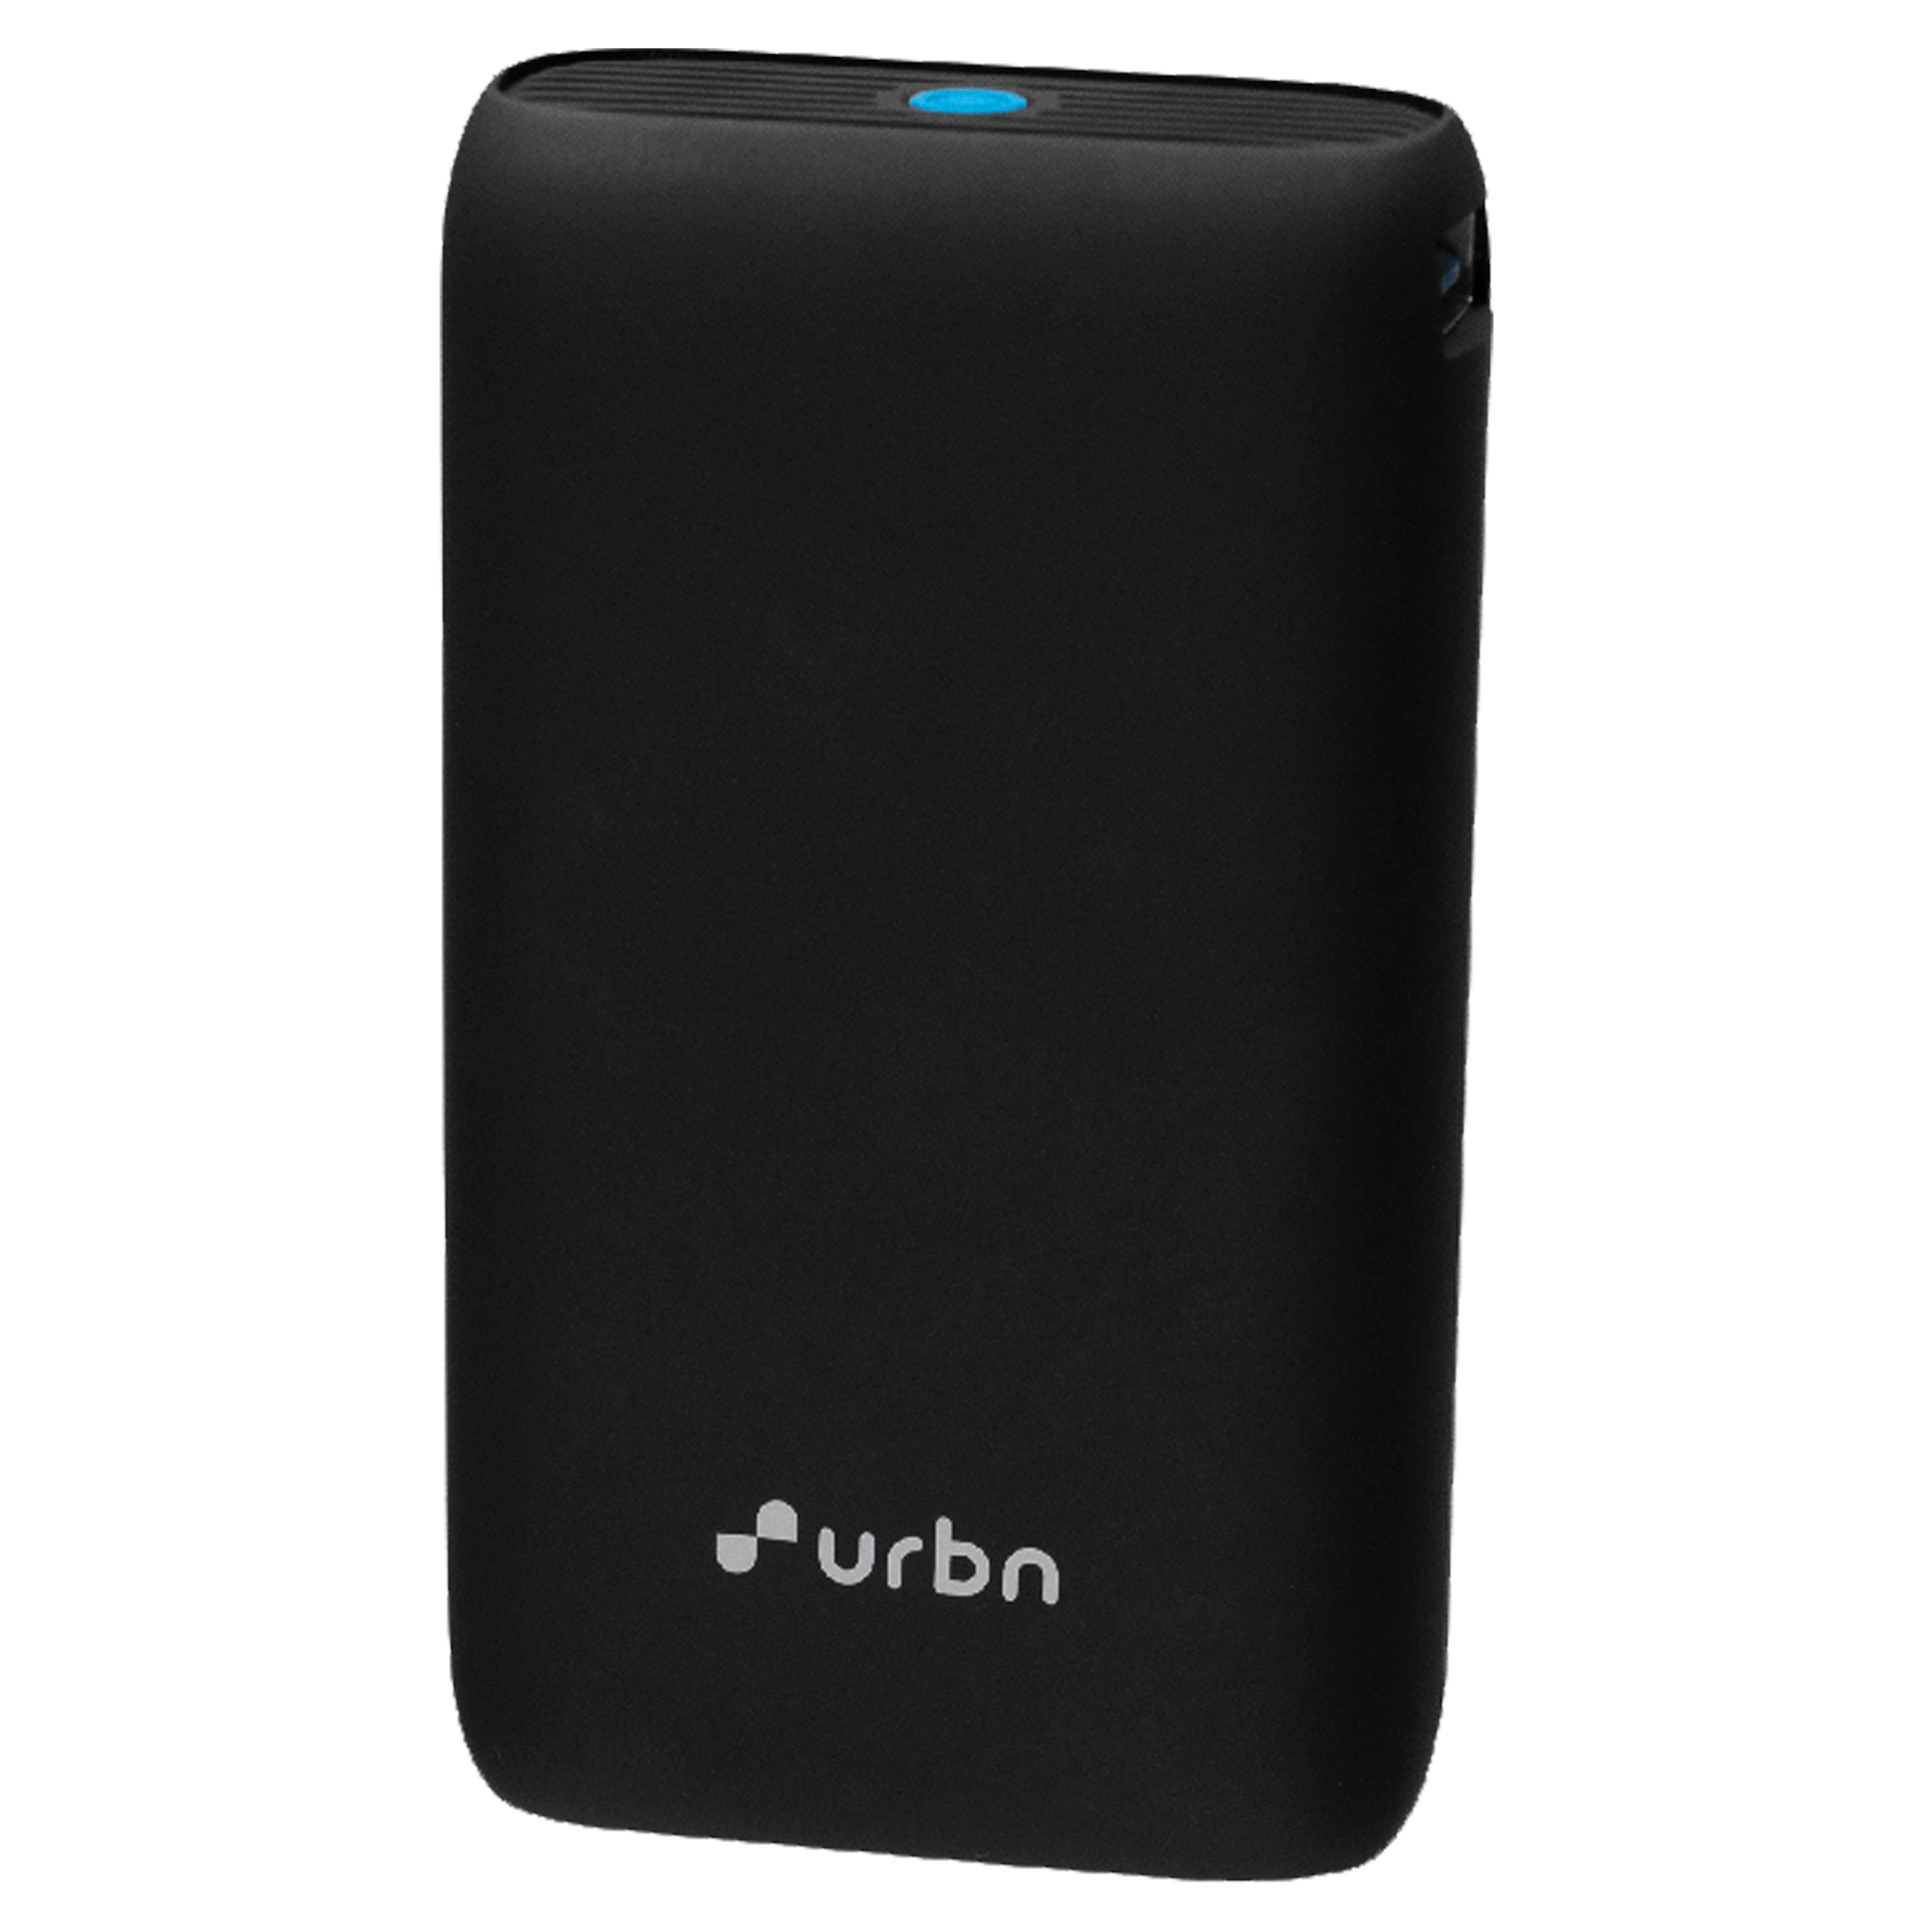 Urbn Nano 10000mAh 2-Port Power Bank (Fast Charging Capability, UPR108_BE, Black)